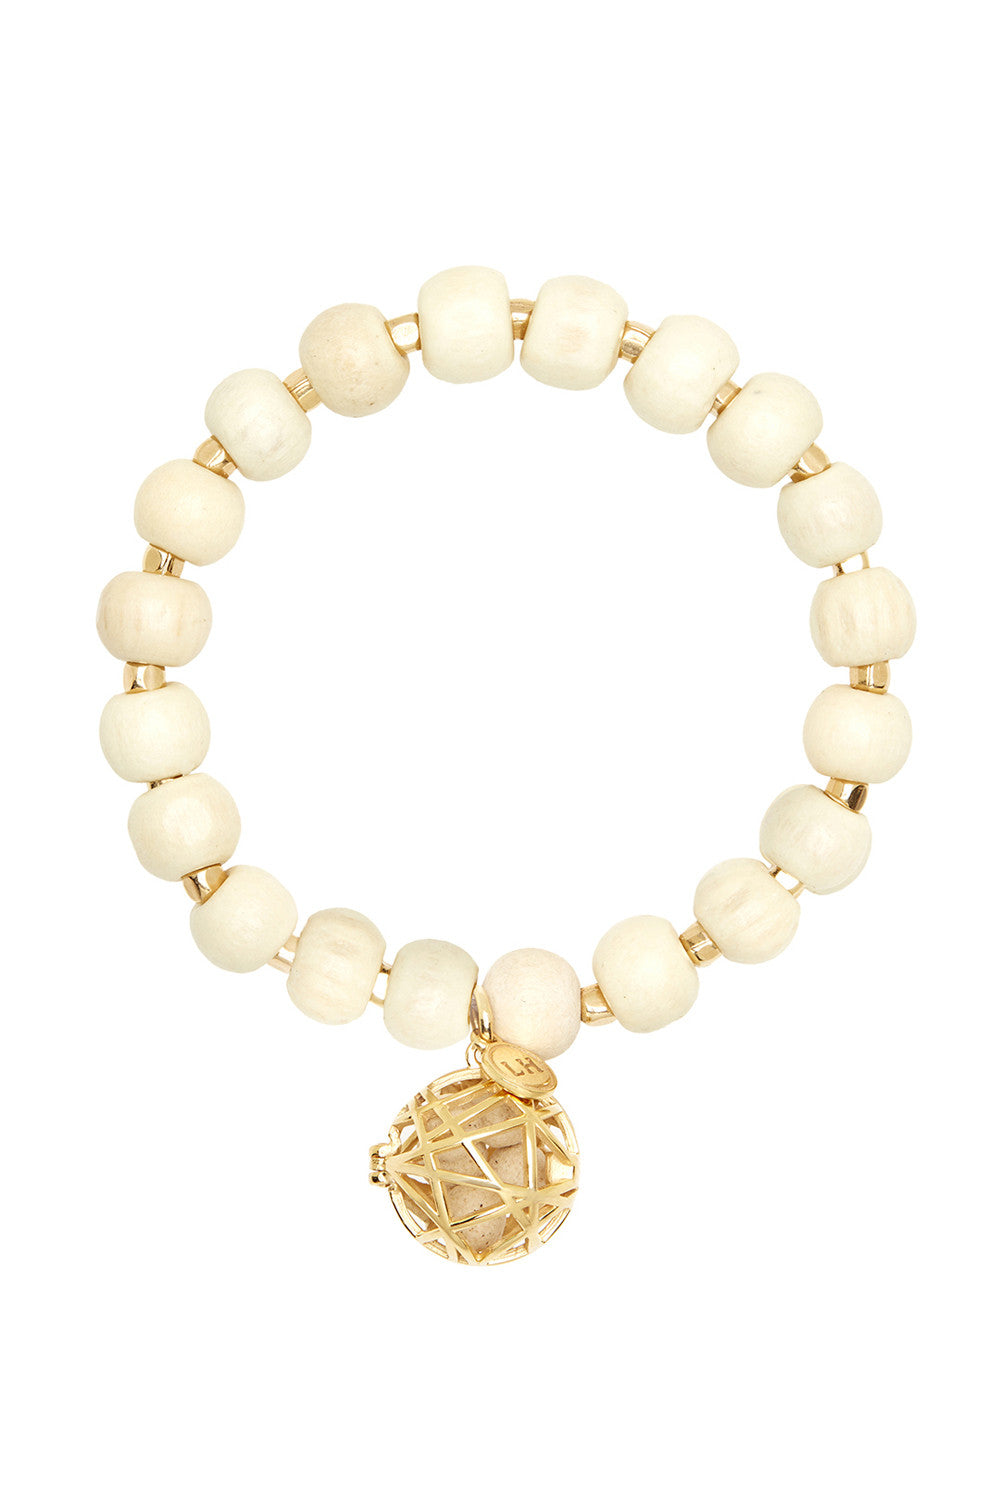 Blonde Wood Bracelet with Gold Nest Charm